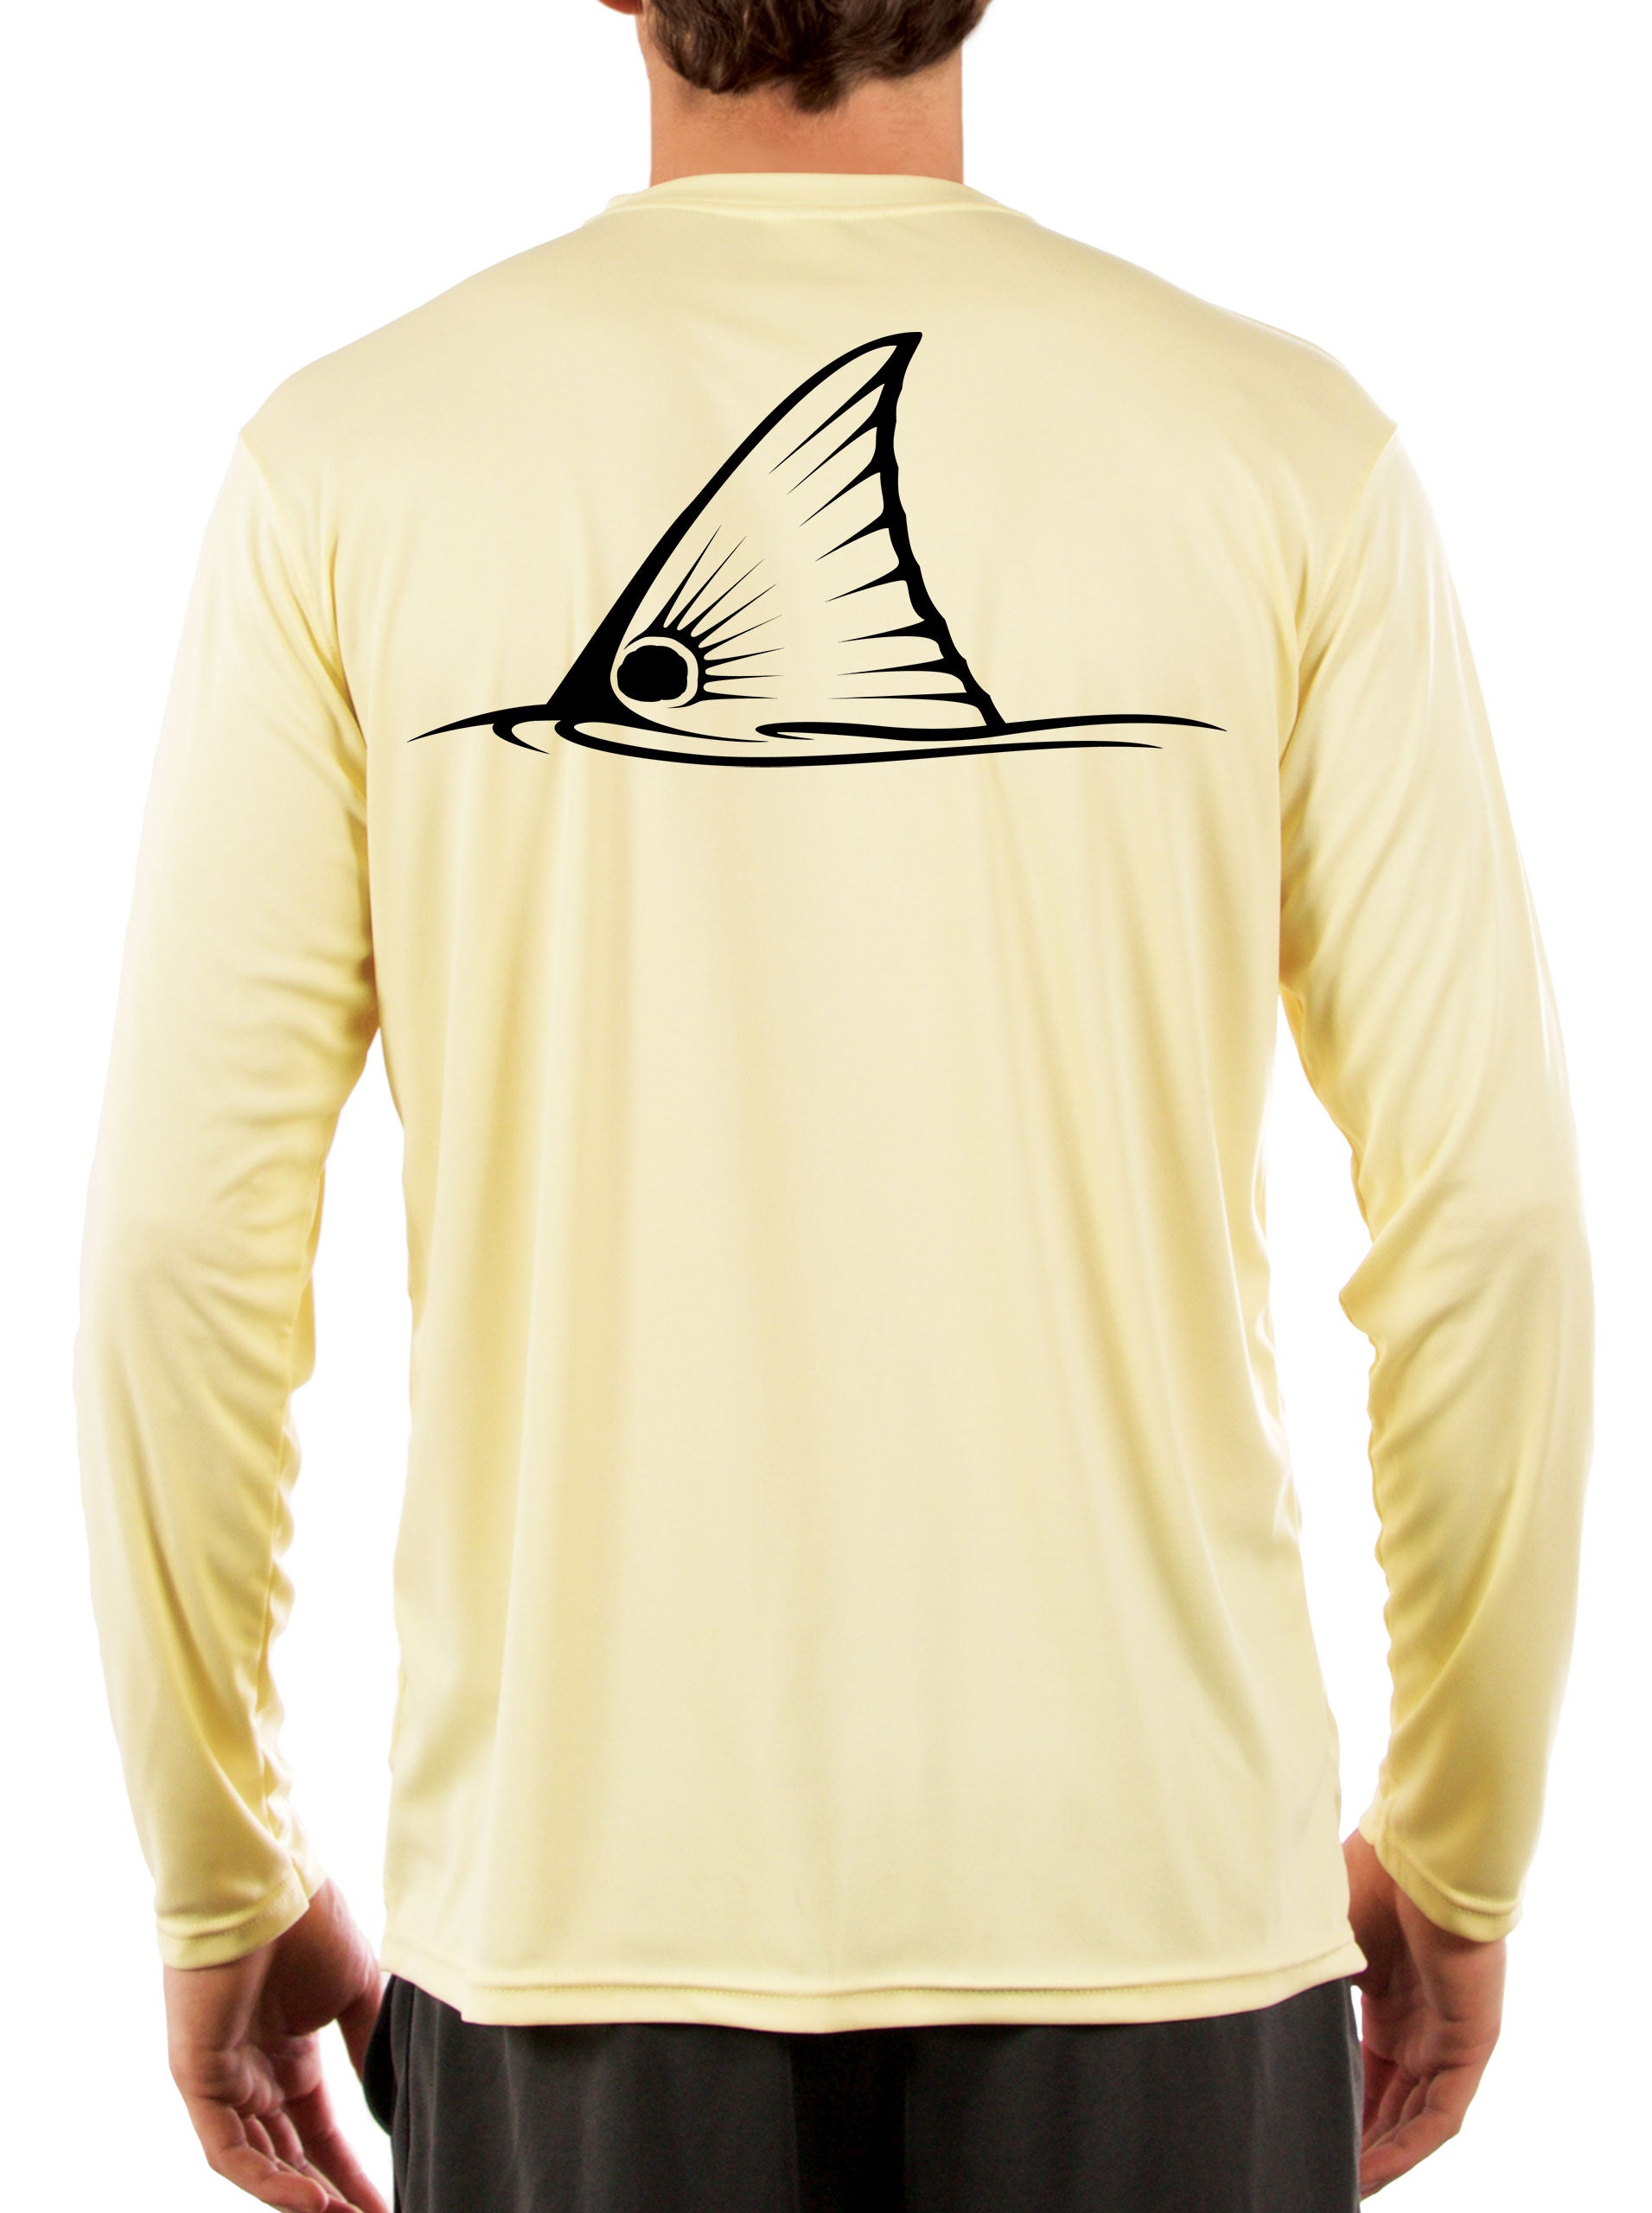 Tailing Redfish Fishing Shirts for Men Red Drum Apparel X-Large / Yellow